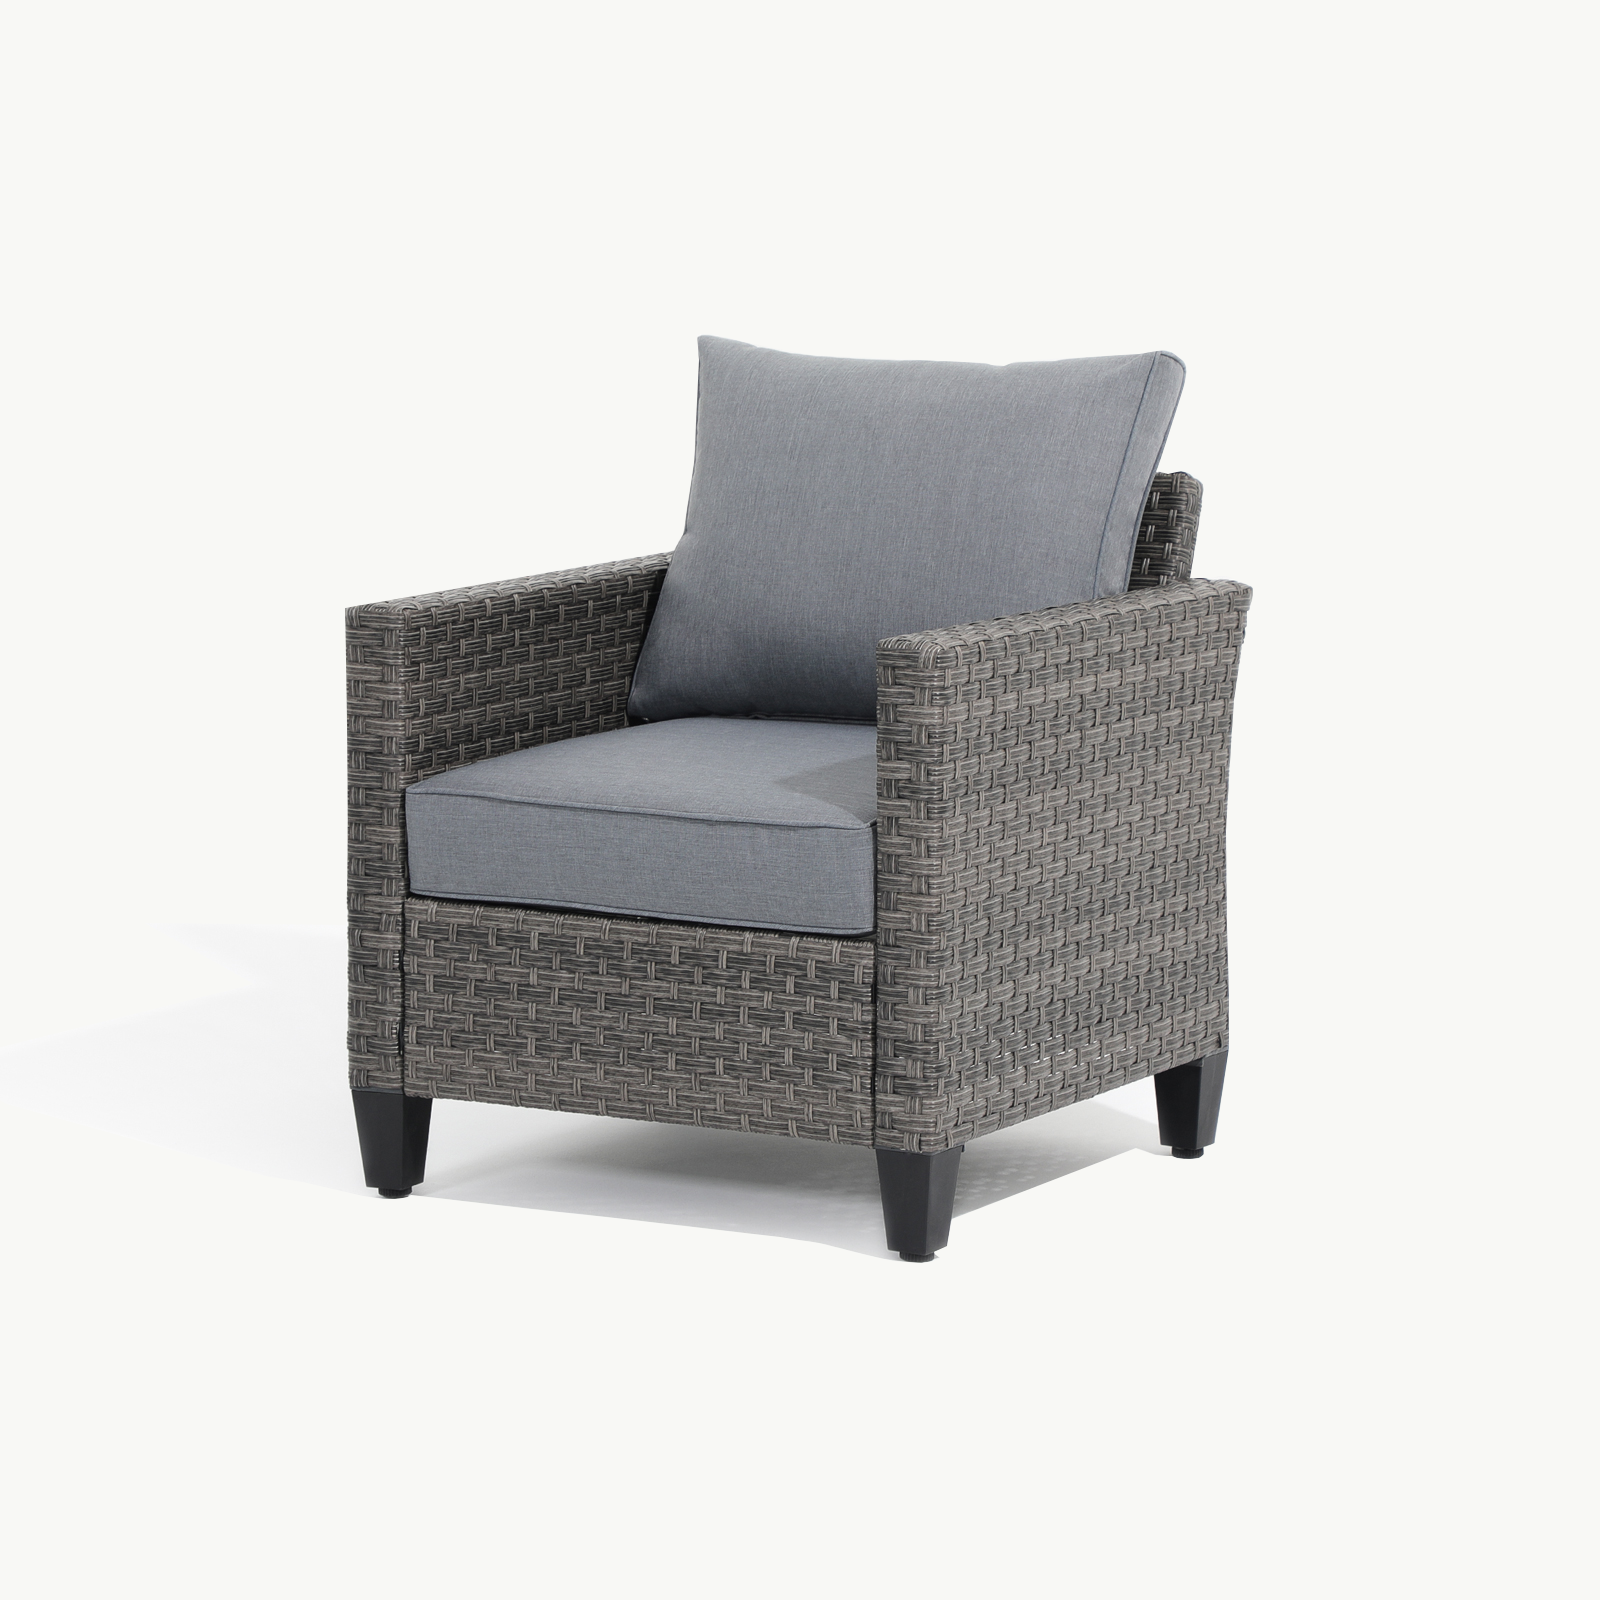 Ayia lounge chair with rattan design, grey cushions, right angle- Jardina Furniture #color_Grey